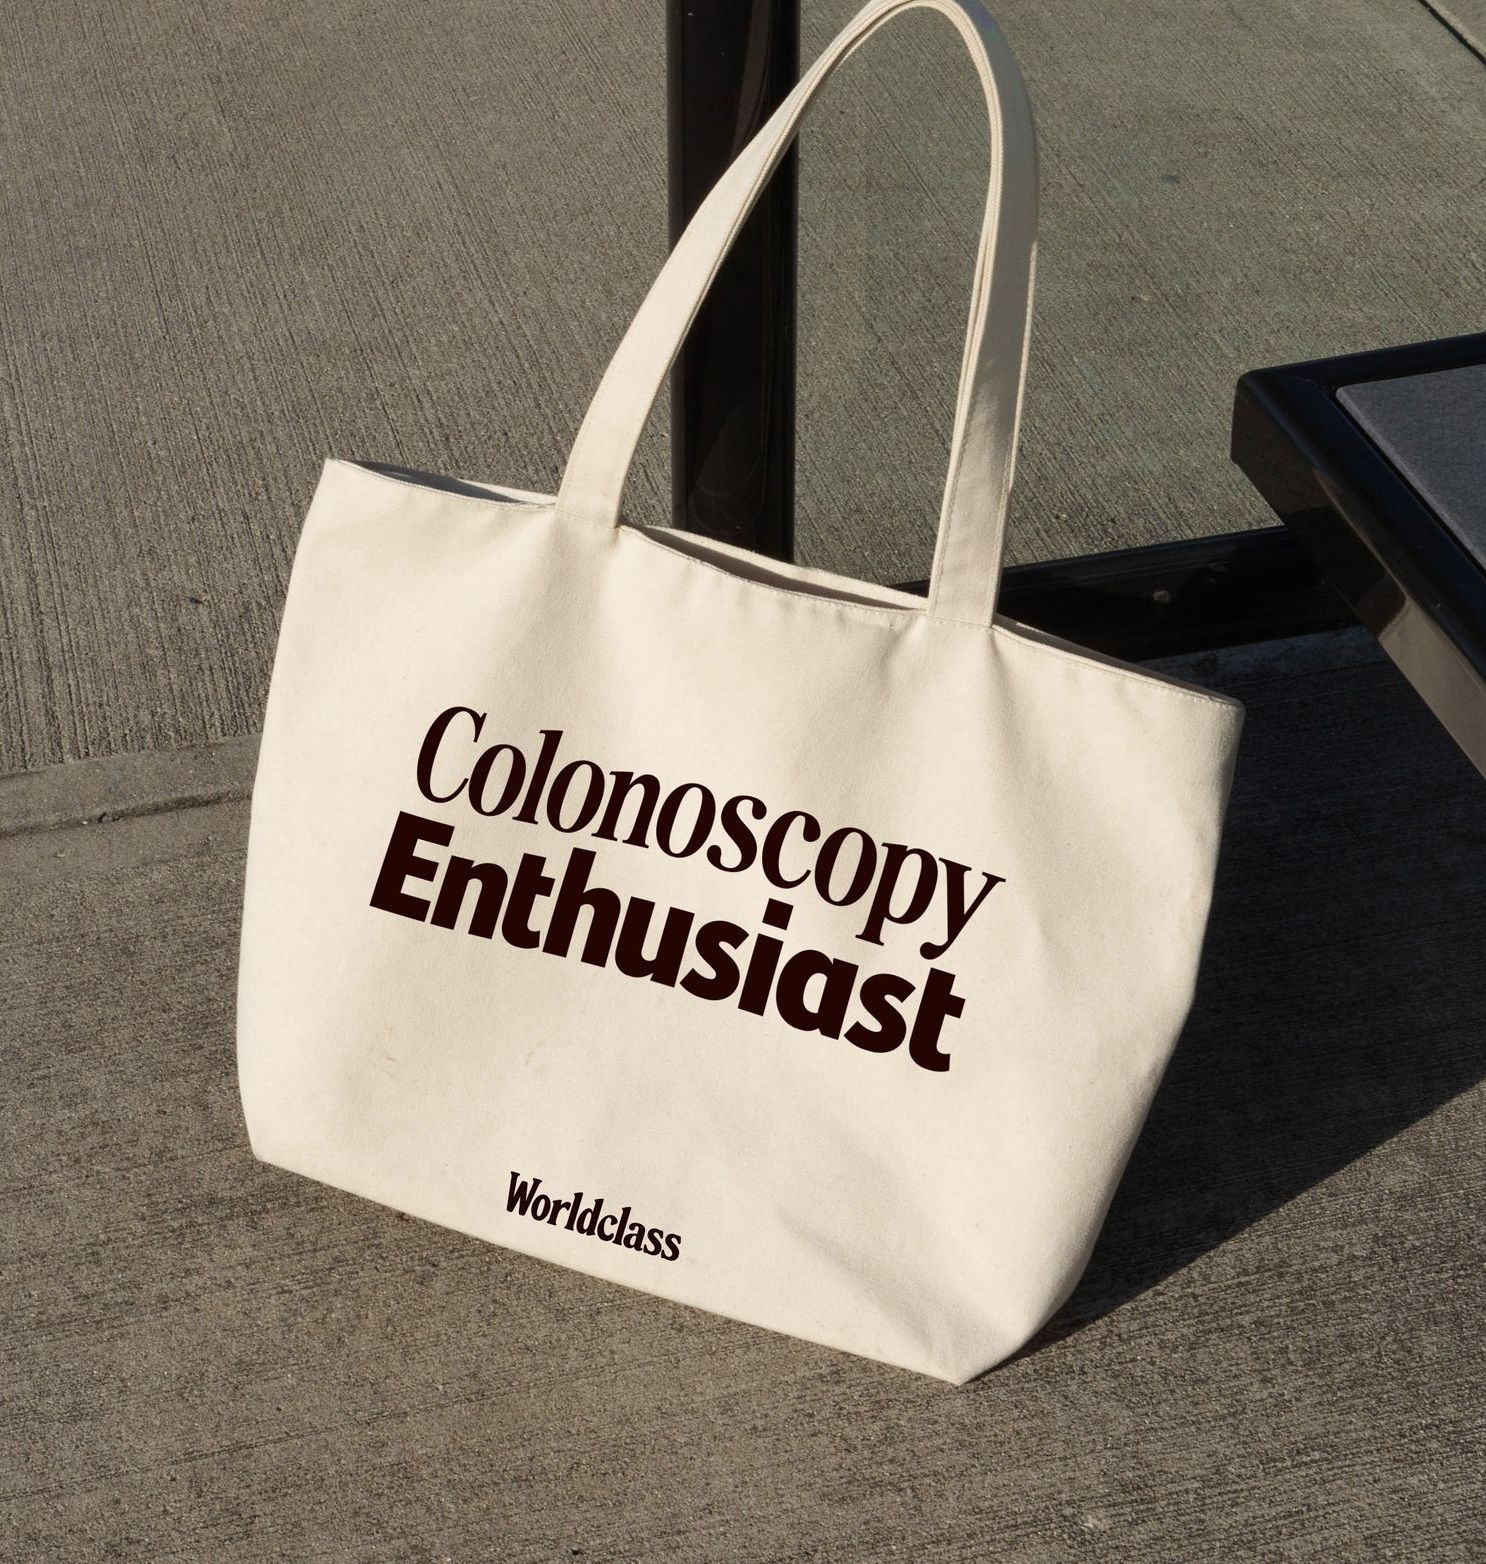 a white tote bag that says colonoscopy enthusiast